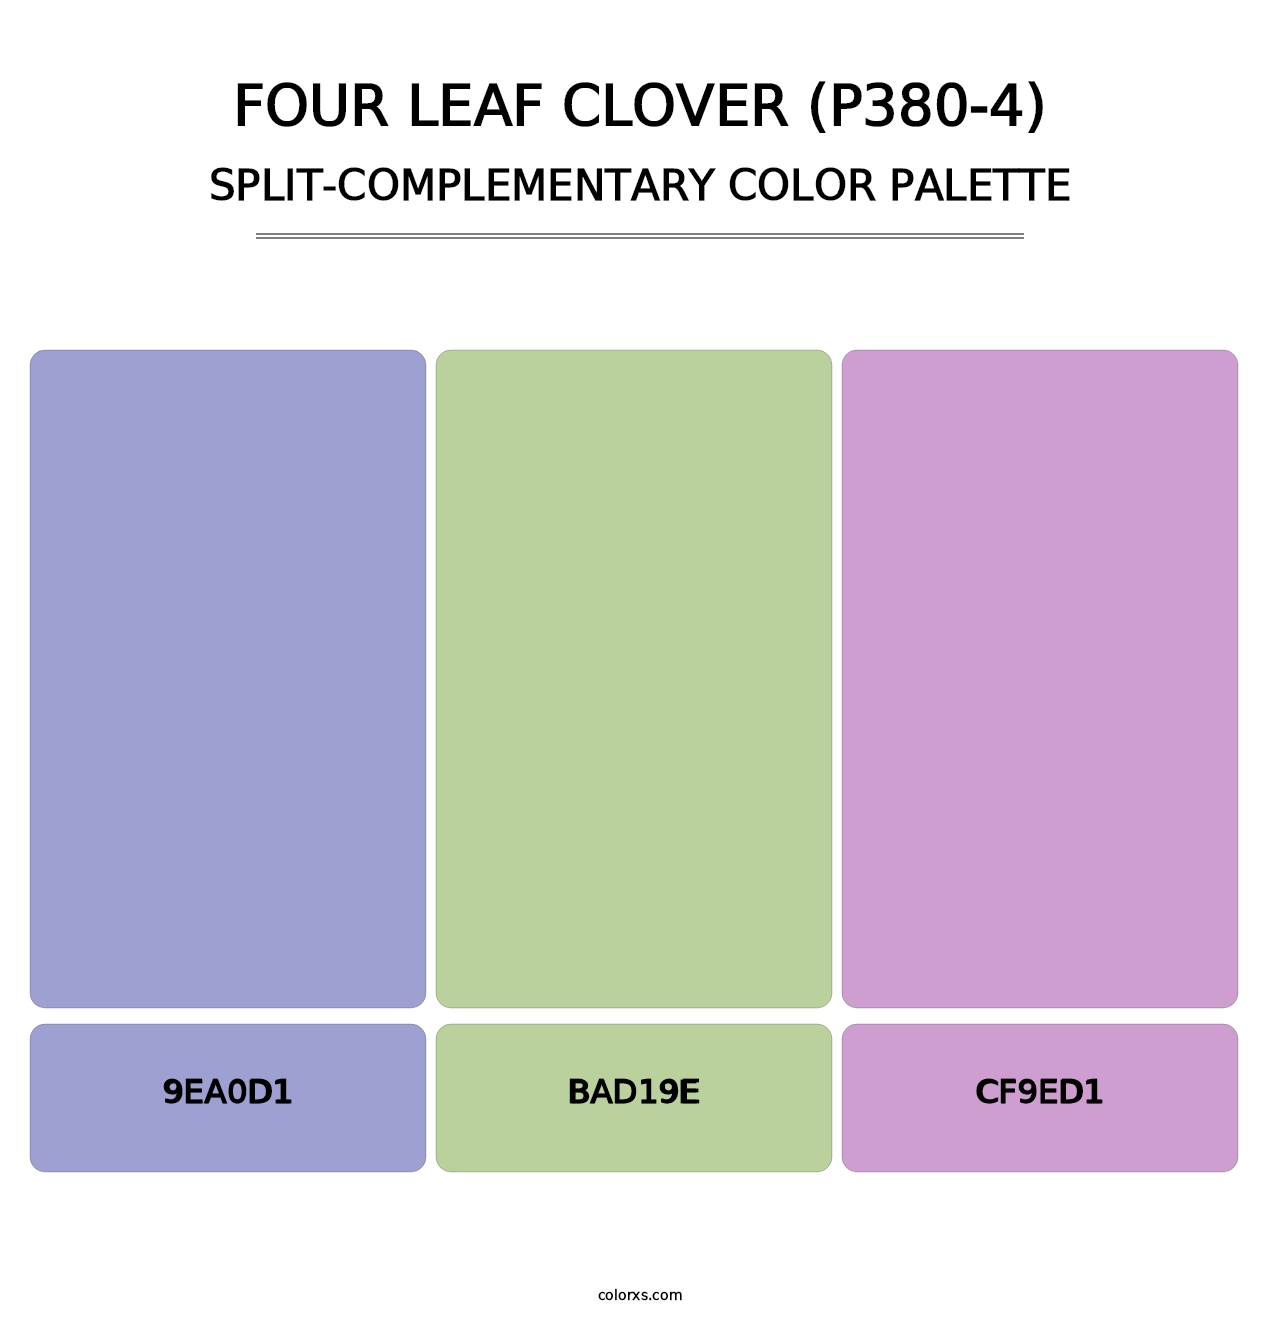 Four Leaf Clover (P380-4) - Split-Complementary Color Palette